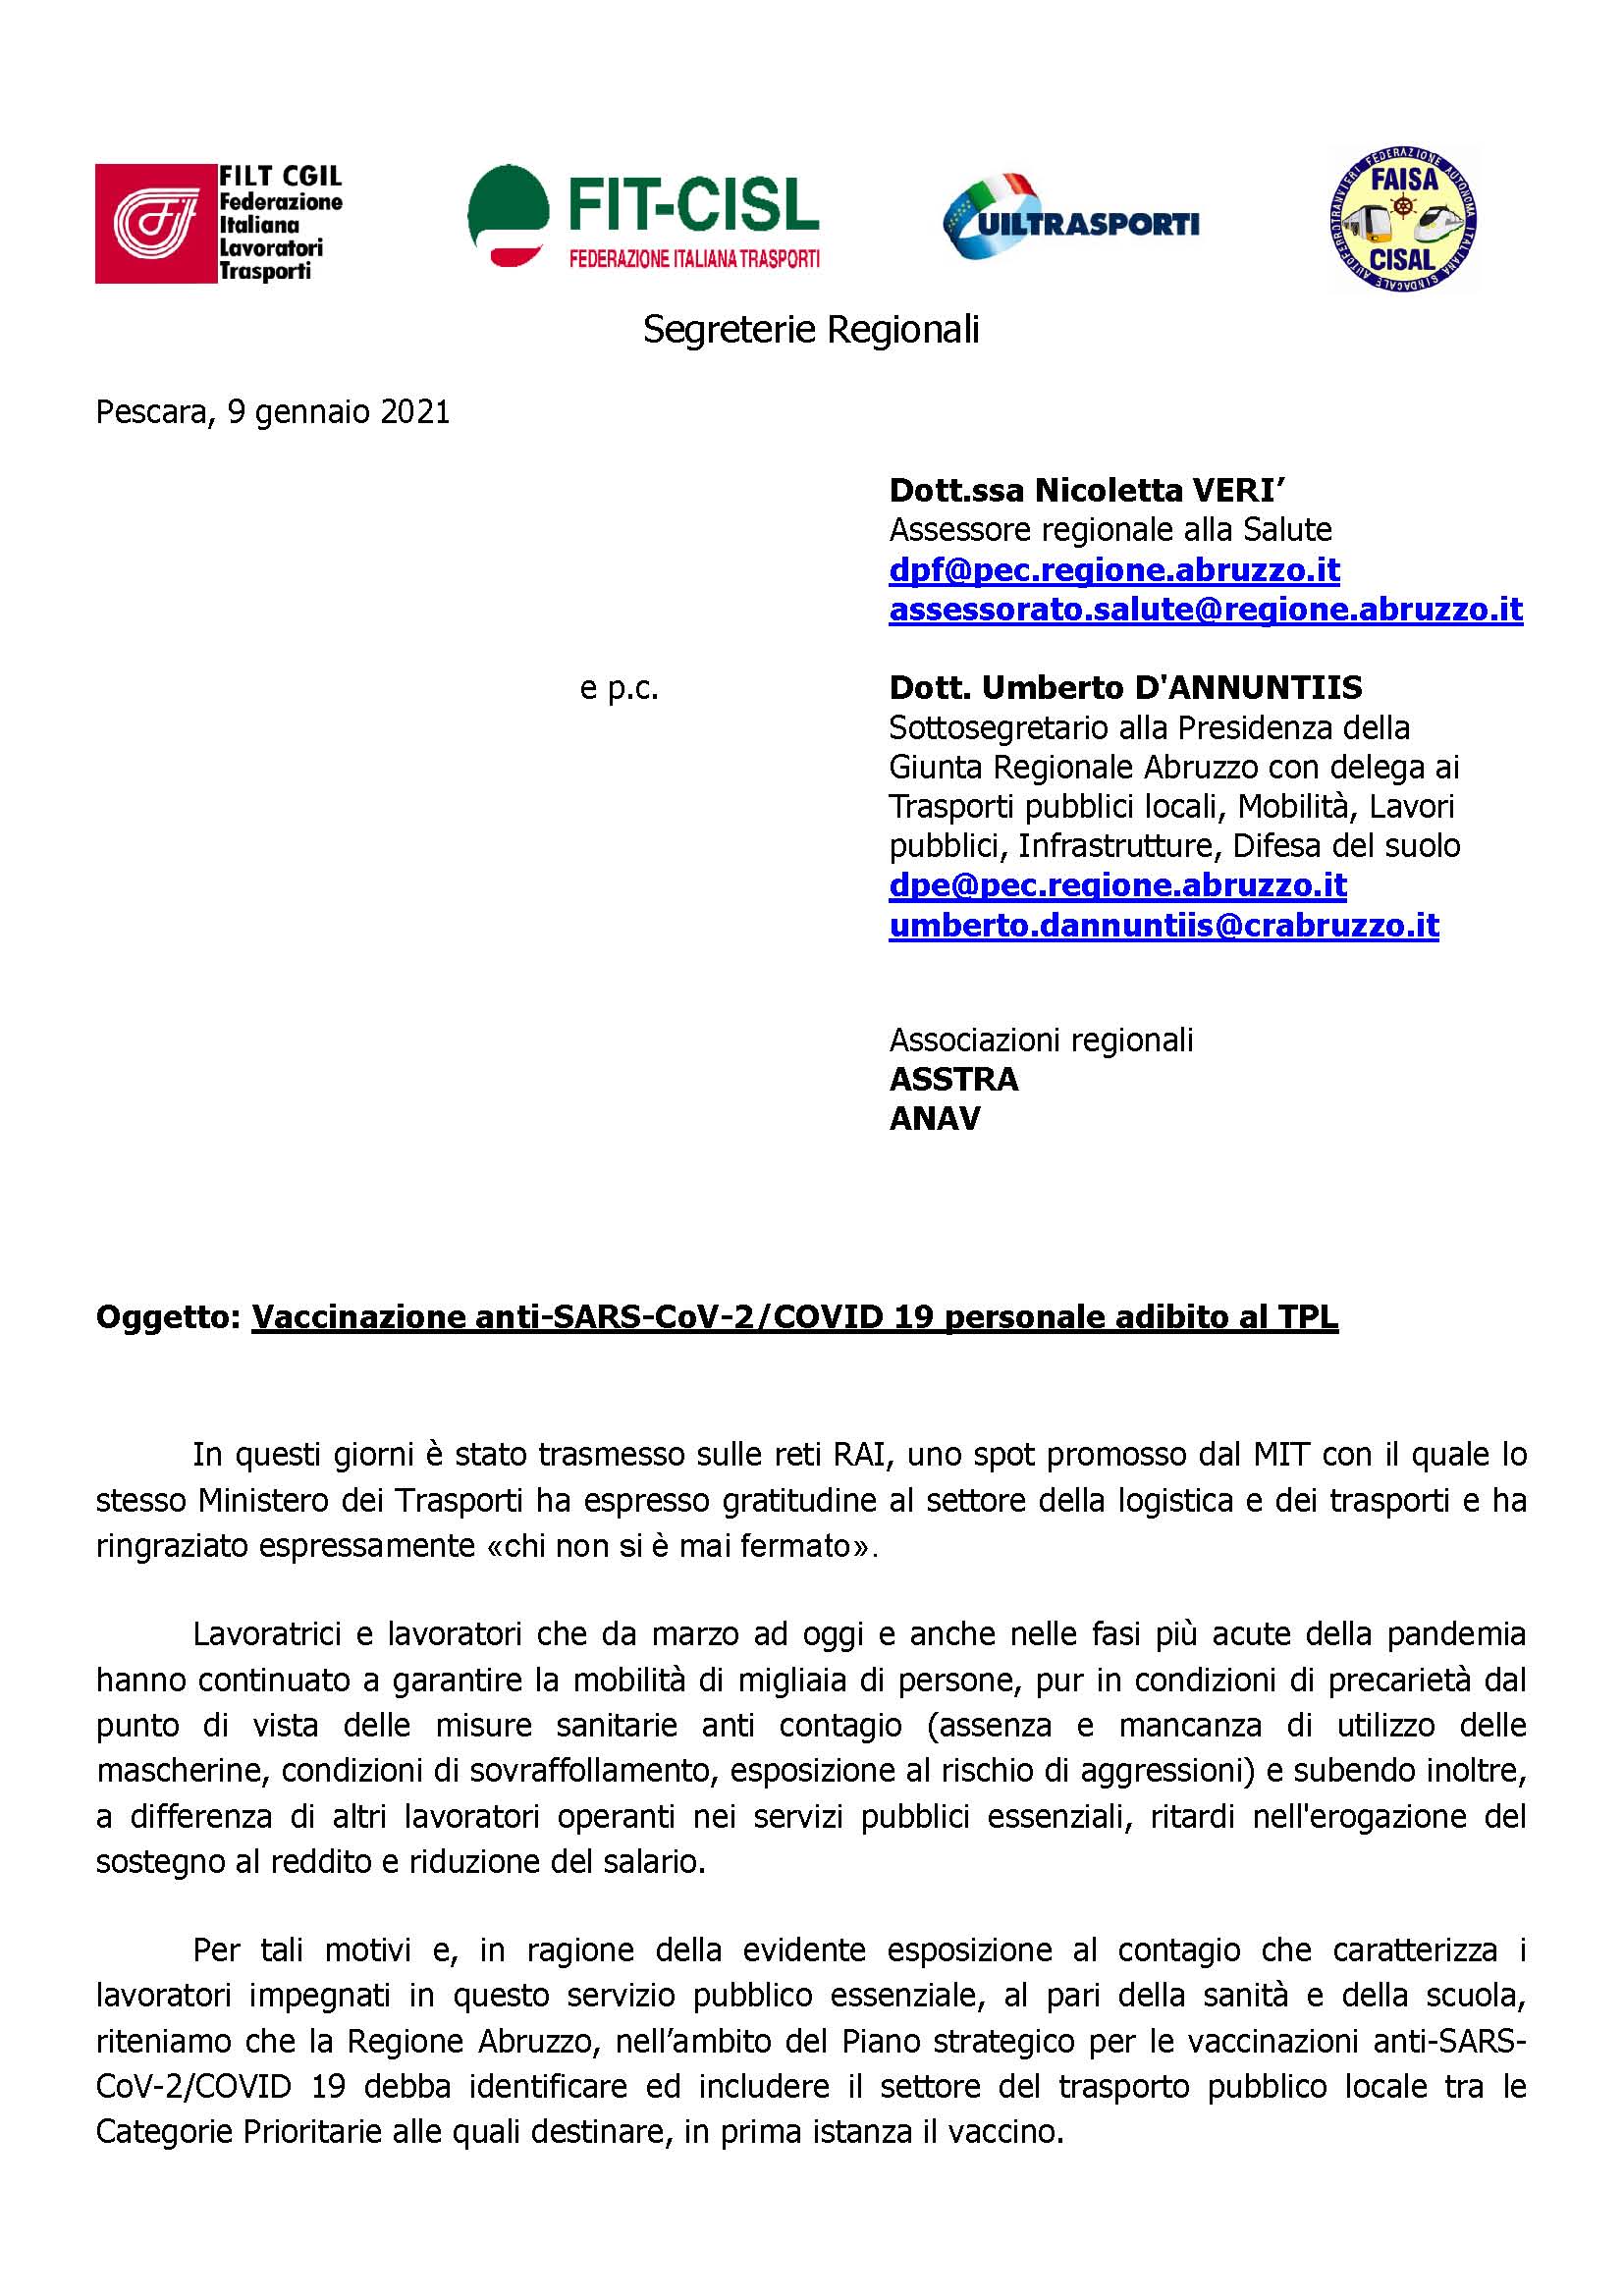 09 gennaio 2021 Filt Cgil Fit Cisl Uiltrasporti Faisa Cisal vaccinazioni anti SARS CoV 2 COVID 19 Page 1